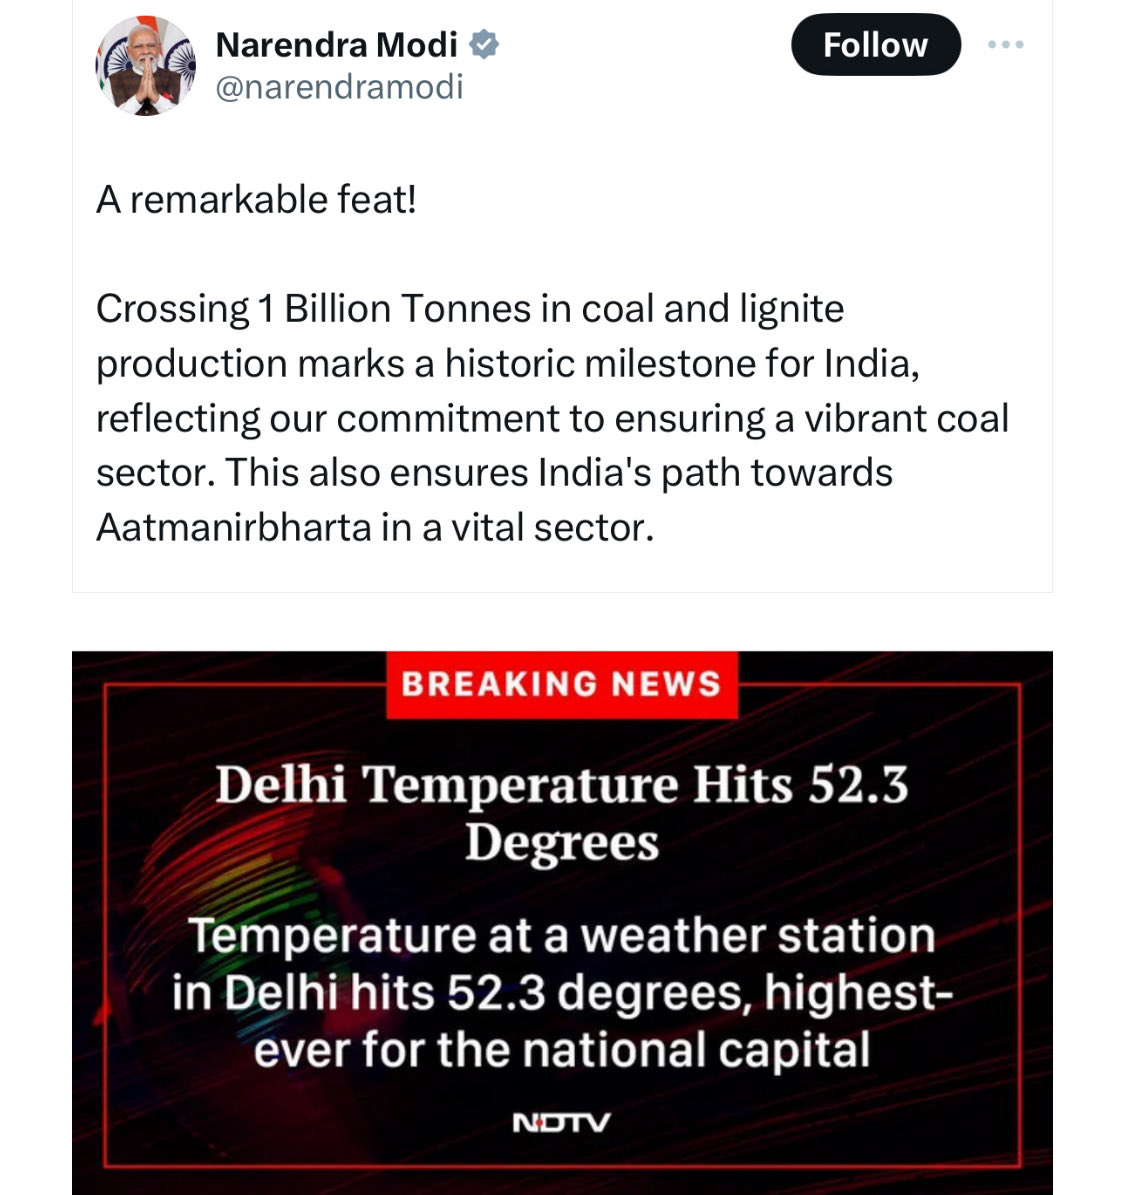 Yes, a remarkable feat Mr. Modi!

#energy #EnergyTransition #ClimateActionNow #renewables #NetZero #fossilfuels